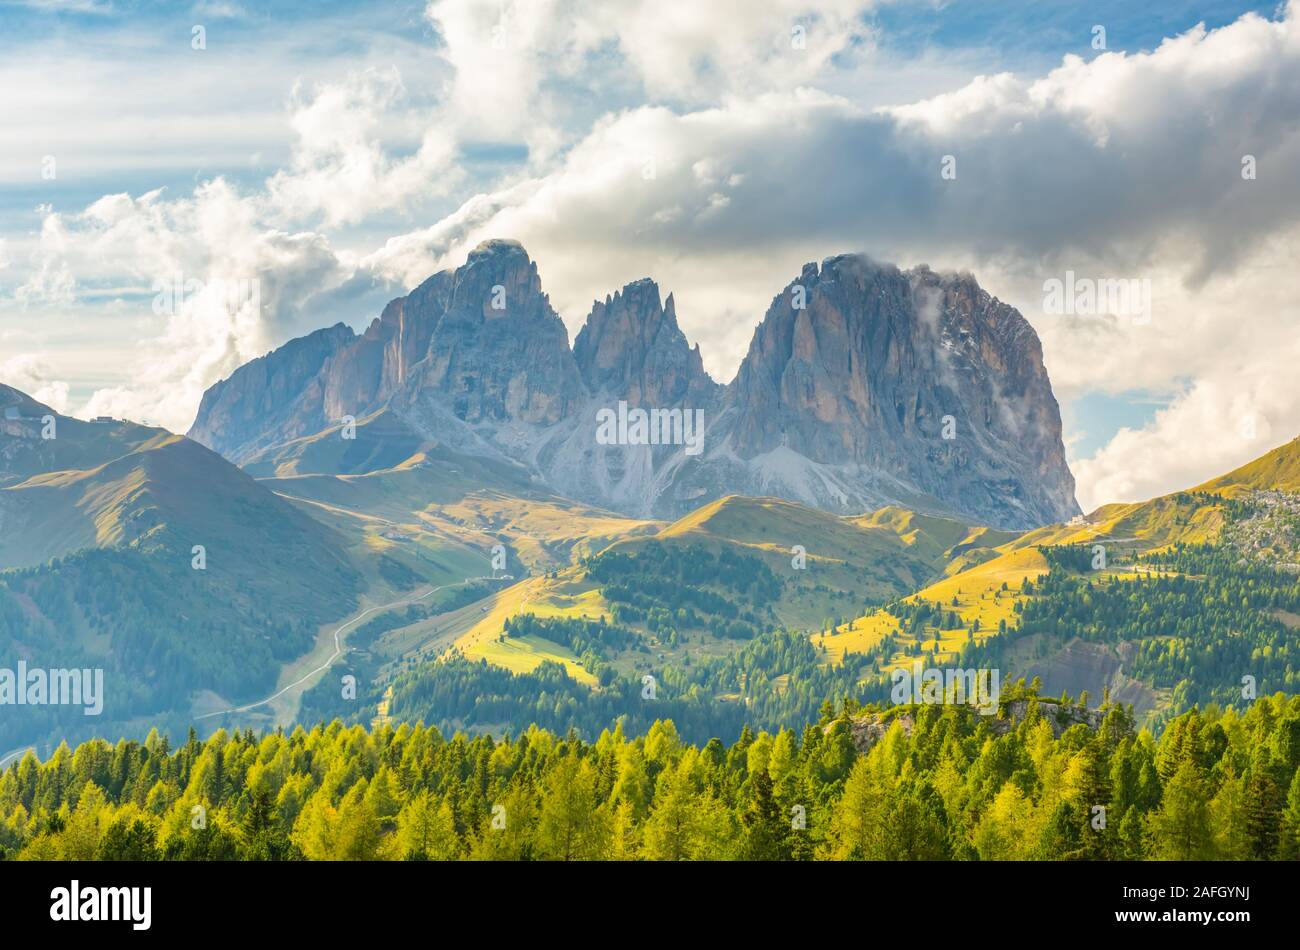 Mountain landscape of Sassolungo or Langkofel group, Dolomites mountains, Italy Stock Photo